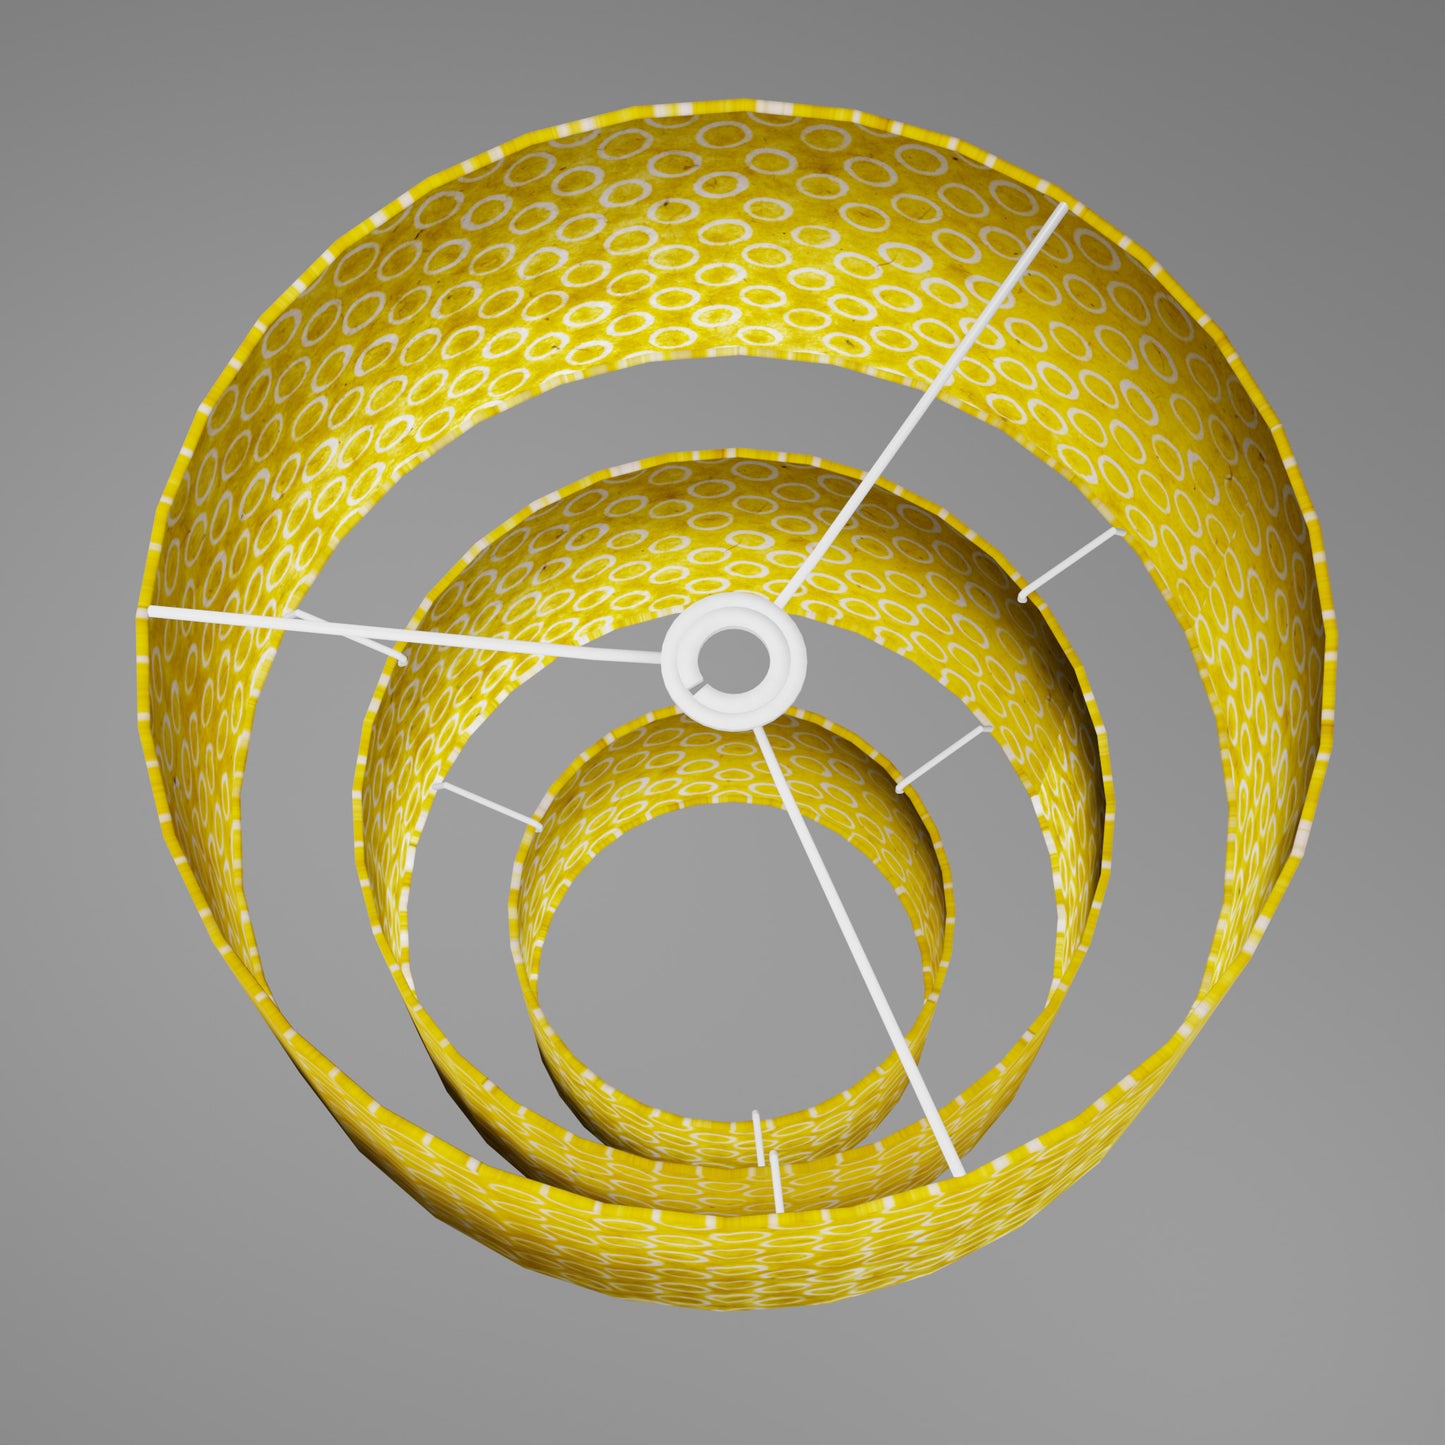 3 Tier Lamp Shade - P71 - Batik Yellow Circles, 40cm x 20cm, 30cm x 17.5cm & 20cm x 15cm